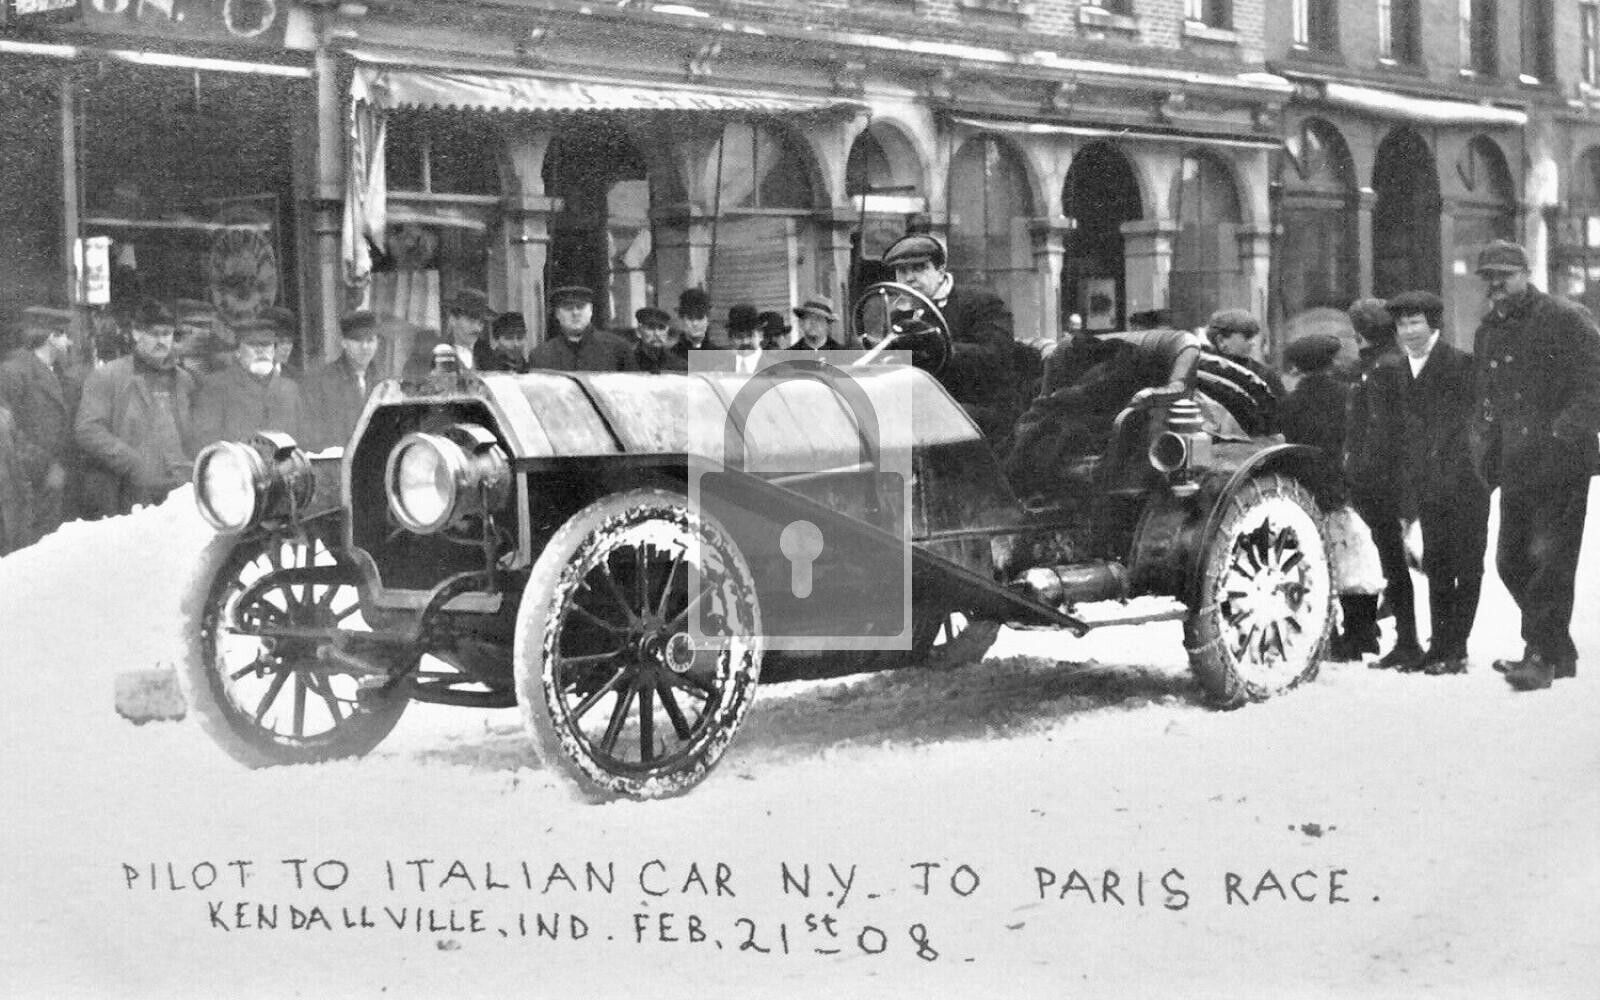 Italian Car New York To Paris Race Kendallville Indiana IN - 8x10 Reprint